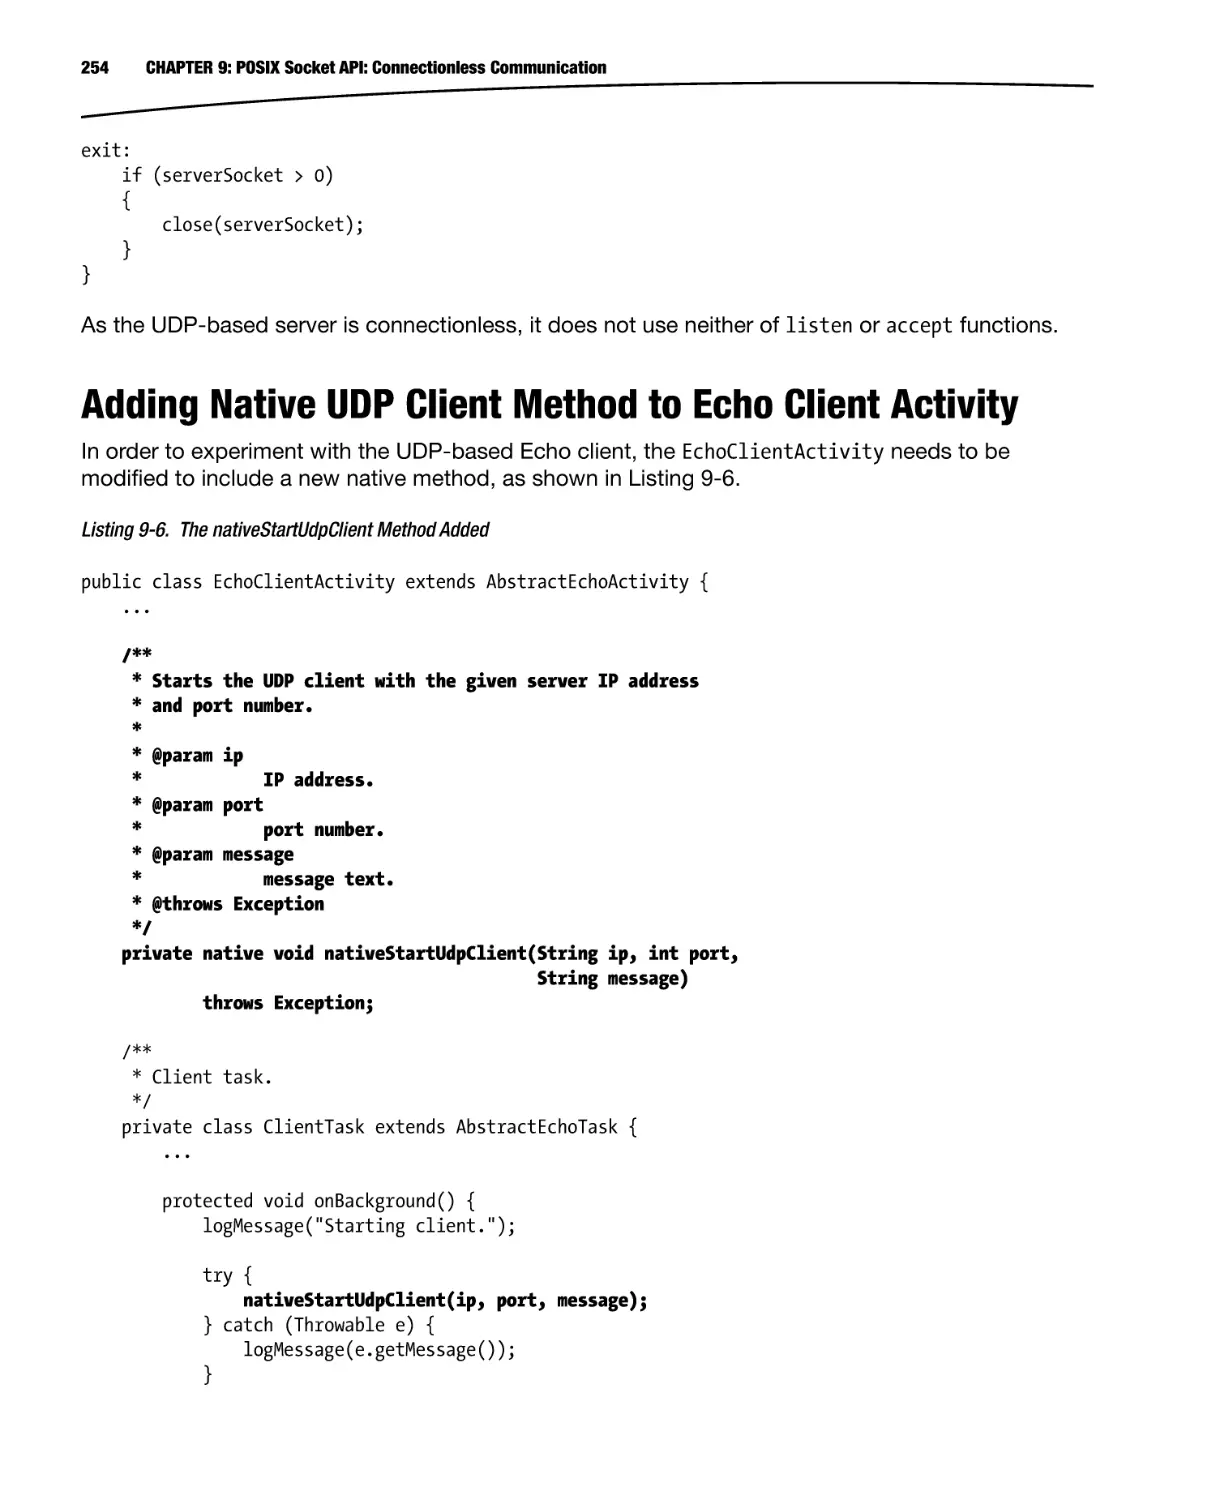 Adding Native UDP Client Method to Echo Client Activity